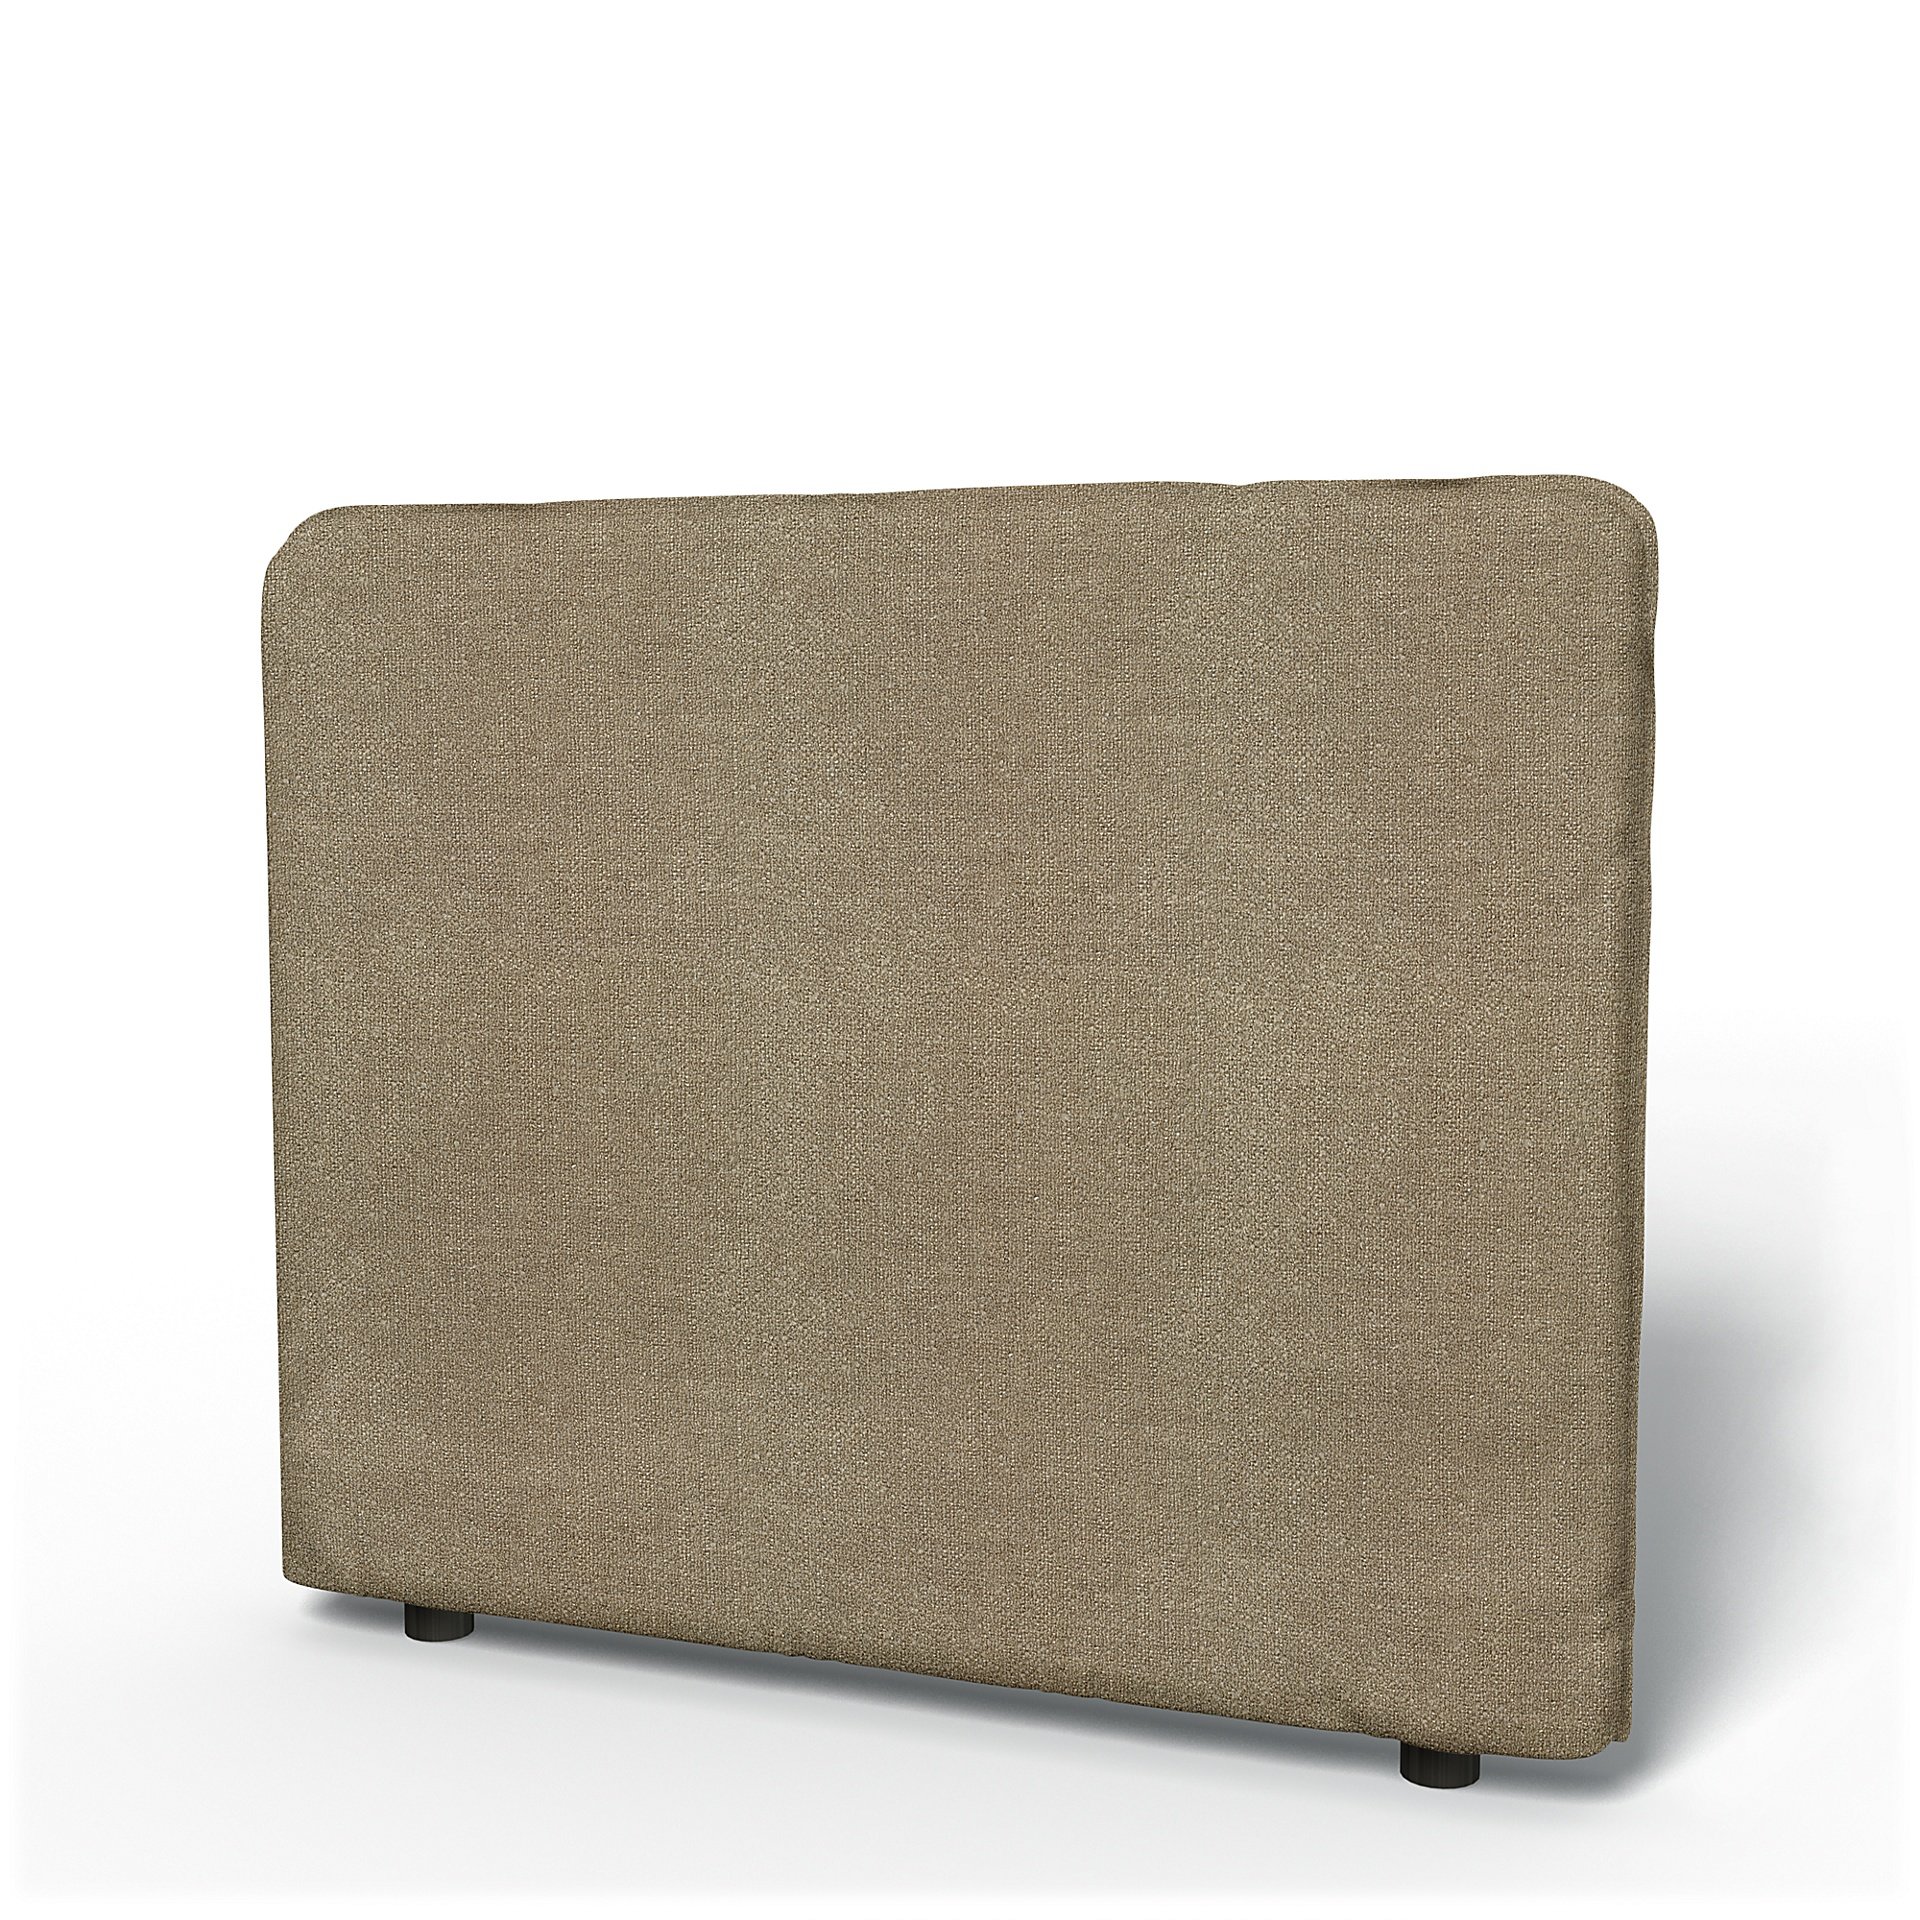 IKEA - Vallentuna Low Backrest Cover 100x80cm 39x32in, Pebble, Boucle & Texture - Bemz